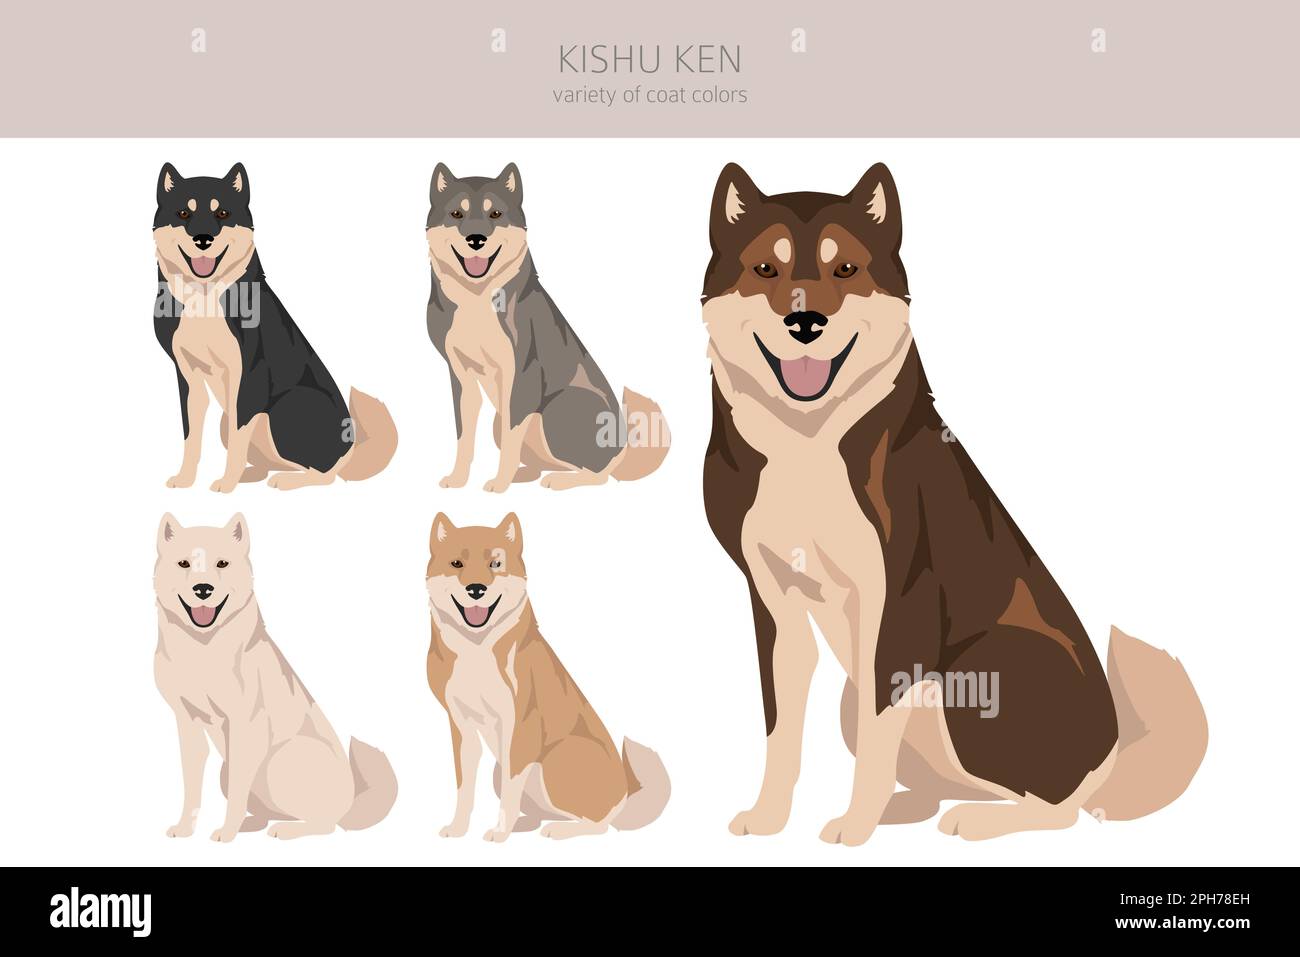 Kishu Ken clipart. Different poses, coat colors set.  Vector illustration Stock Vector